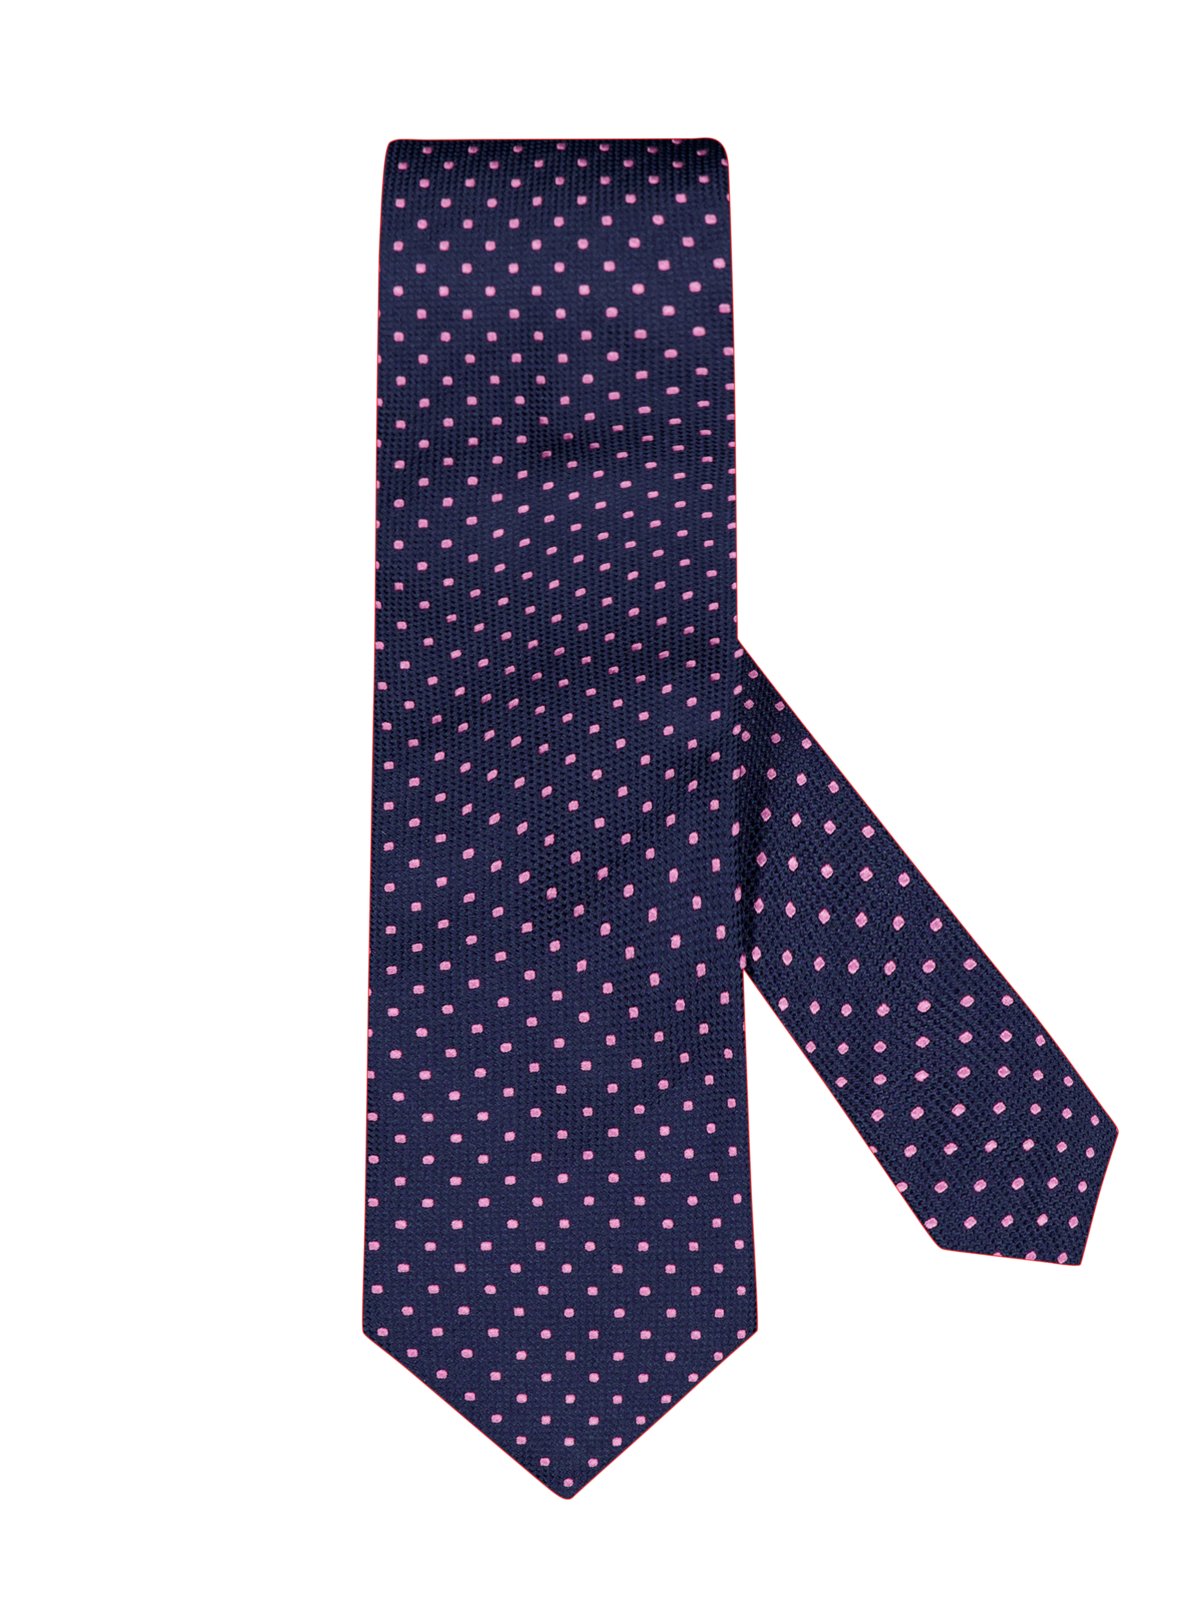 Ascot Krawatte aus Seide mit Punktmuster